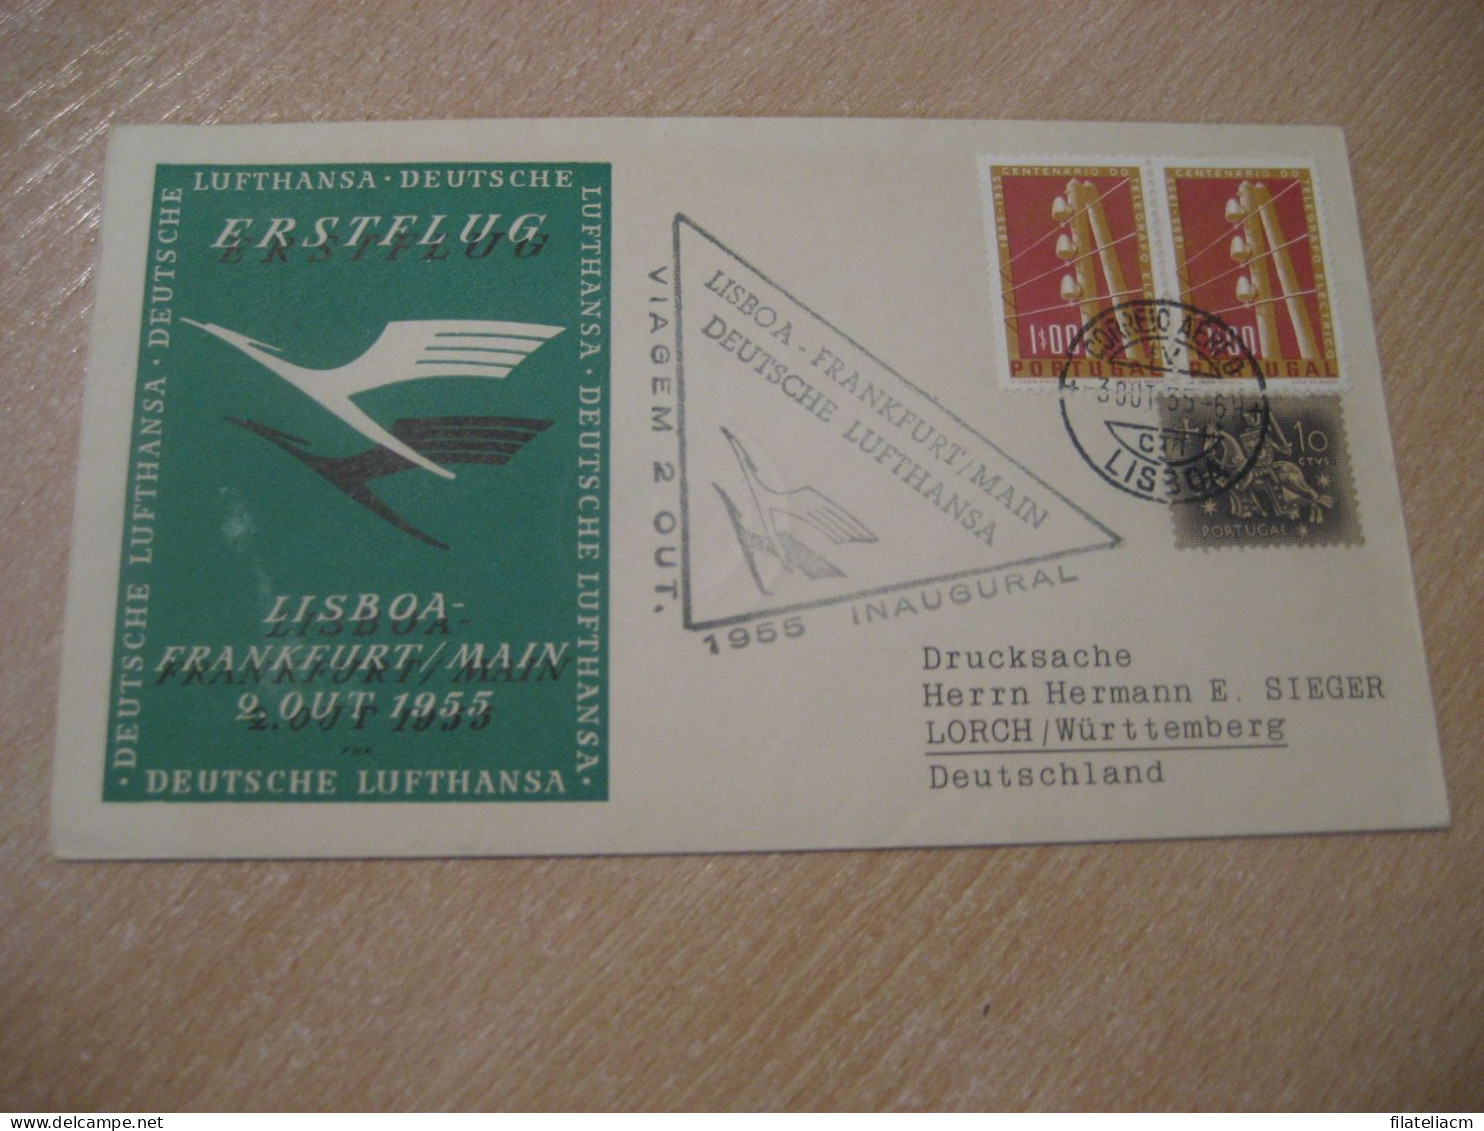 LISBOA - FRANKFURT 1955 To Lorch First Flight Inaugural Lufthansa Cancel Cover PORTUGAL GERMANY - Storia Postale